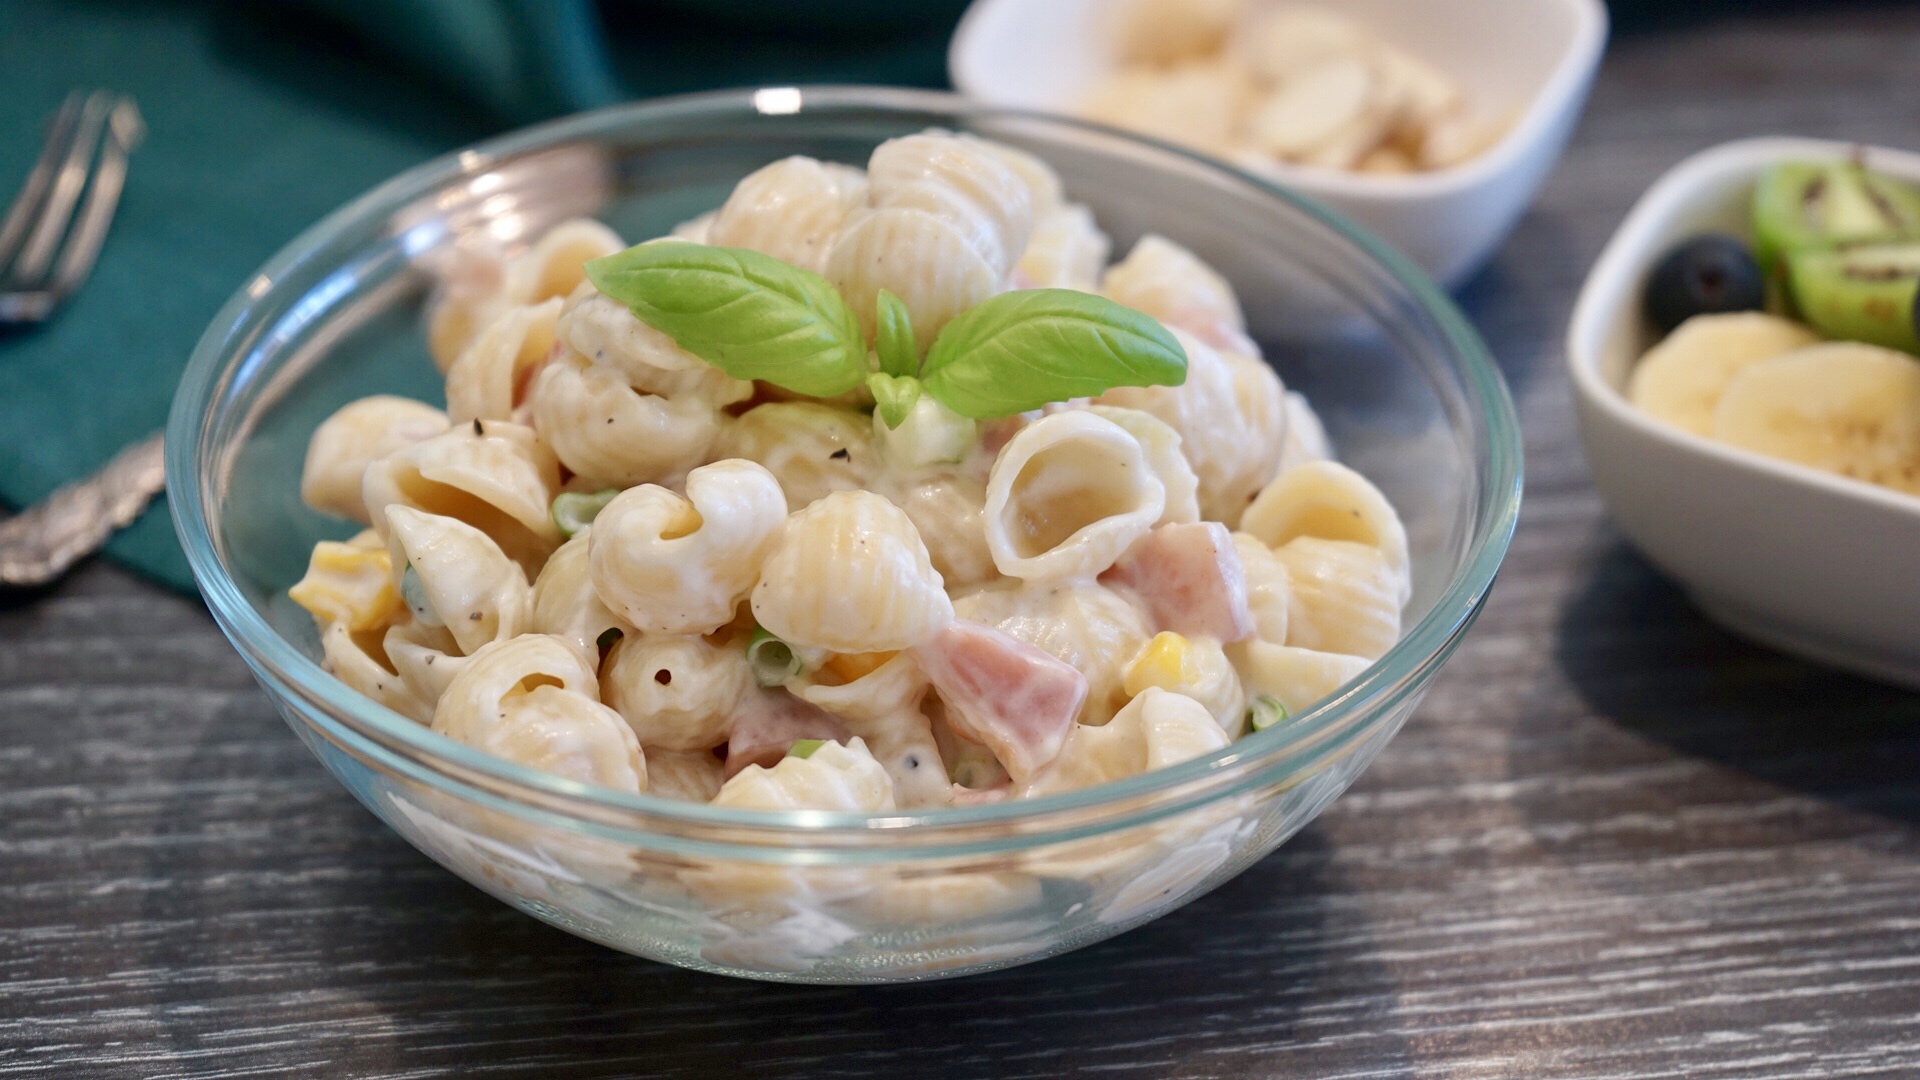 火腿玉米贝壳面沙拉 Creamy Seashells pasta salad with ham, corn and pea的做法